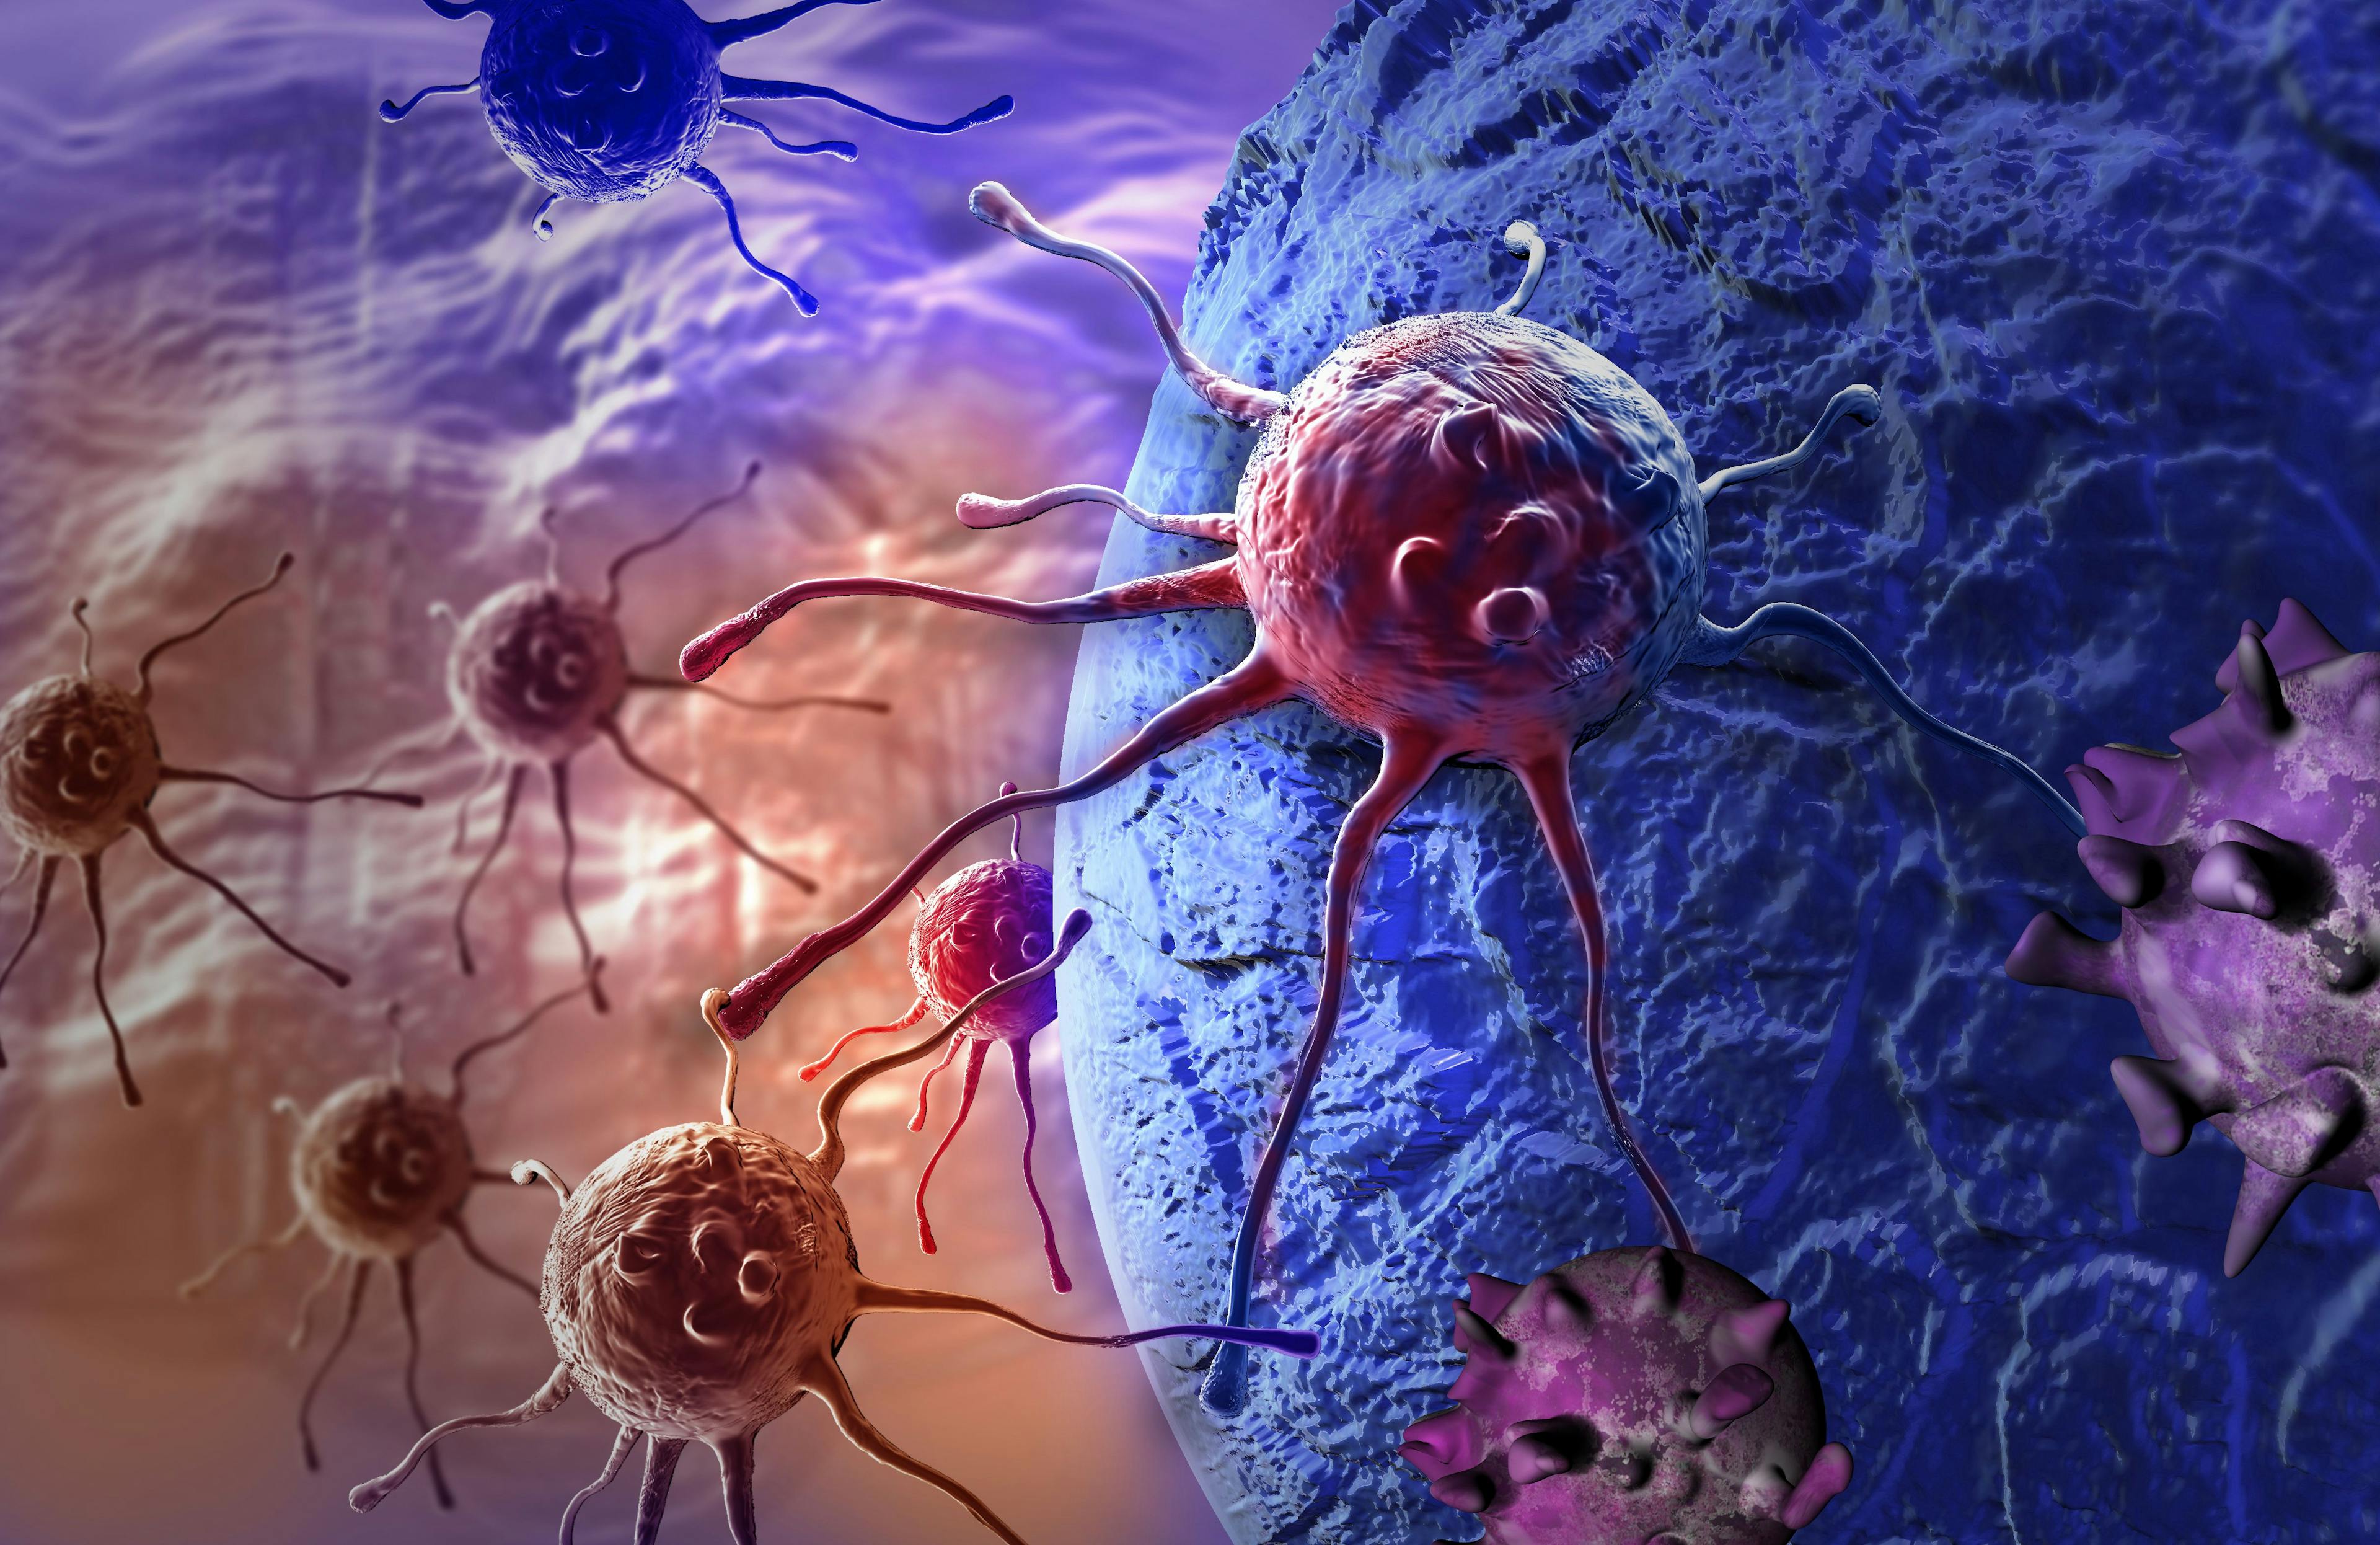 Cancer Cell: © vitanovski - stock.adobe.com